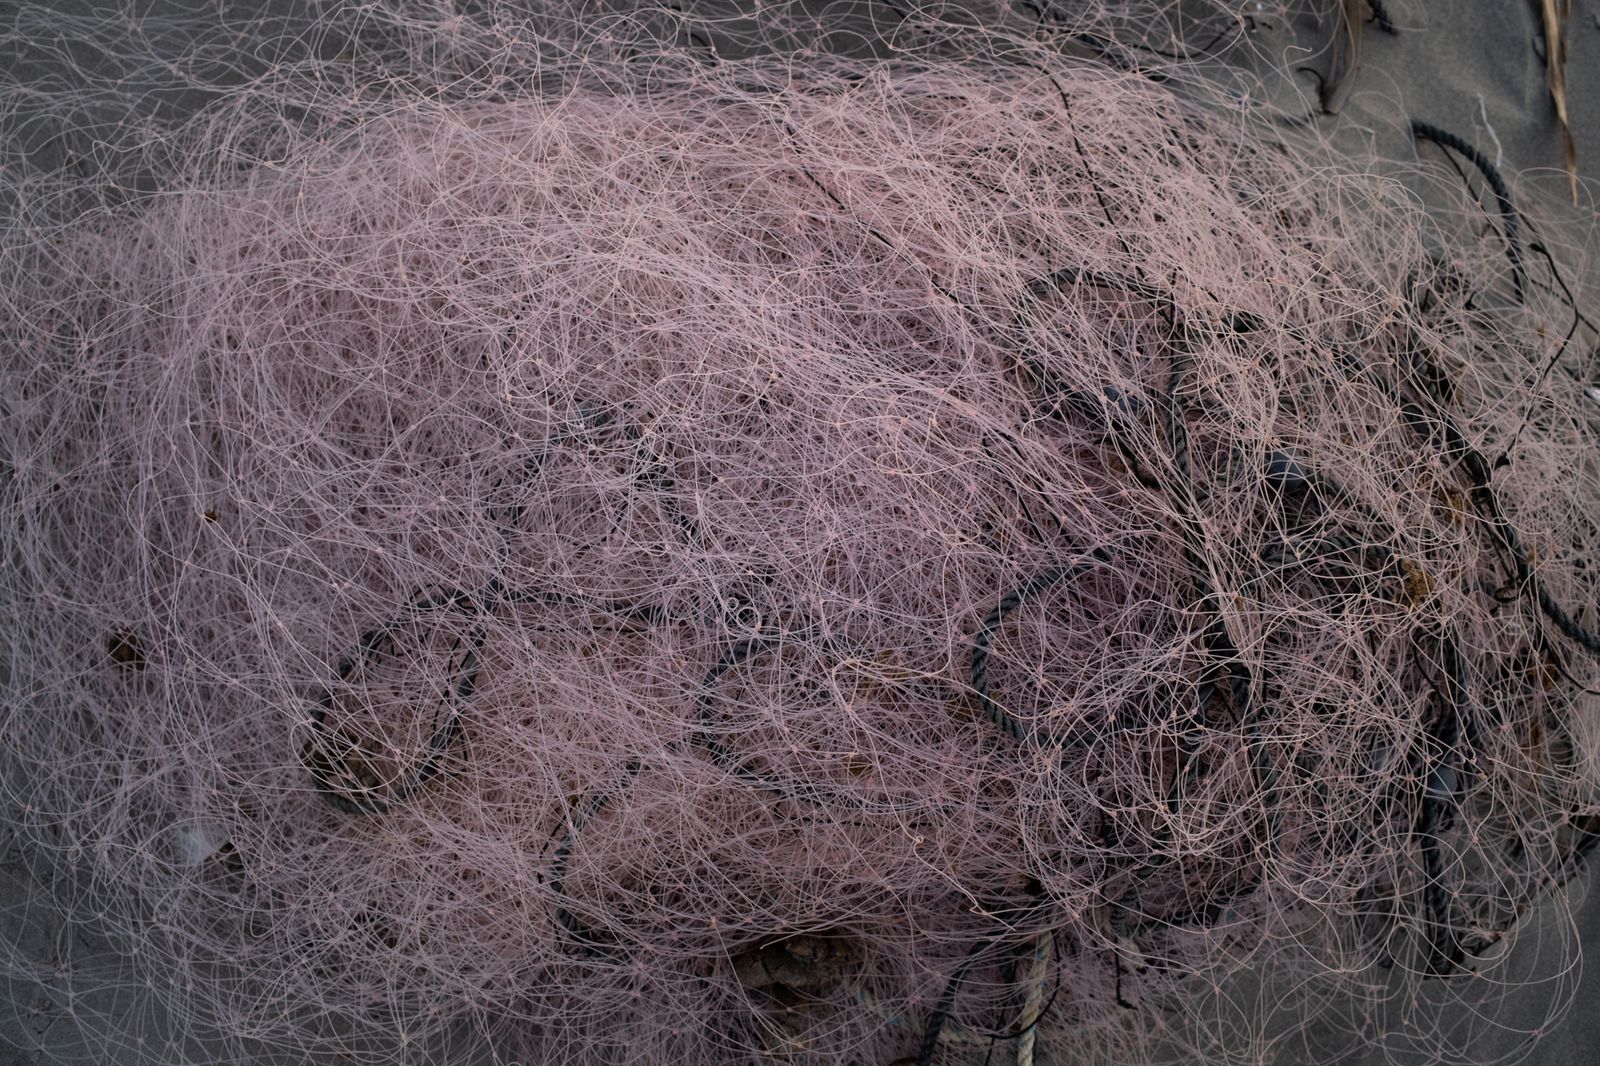 © Sofia Aldinio - An empty fish net lays on the beach. January 2021.